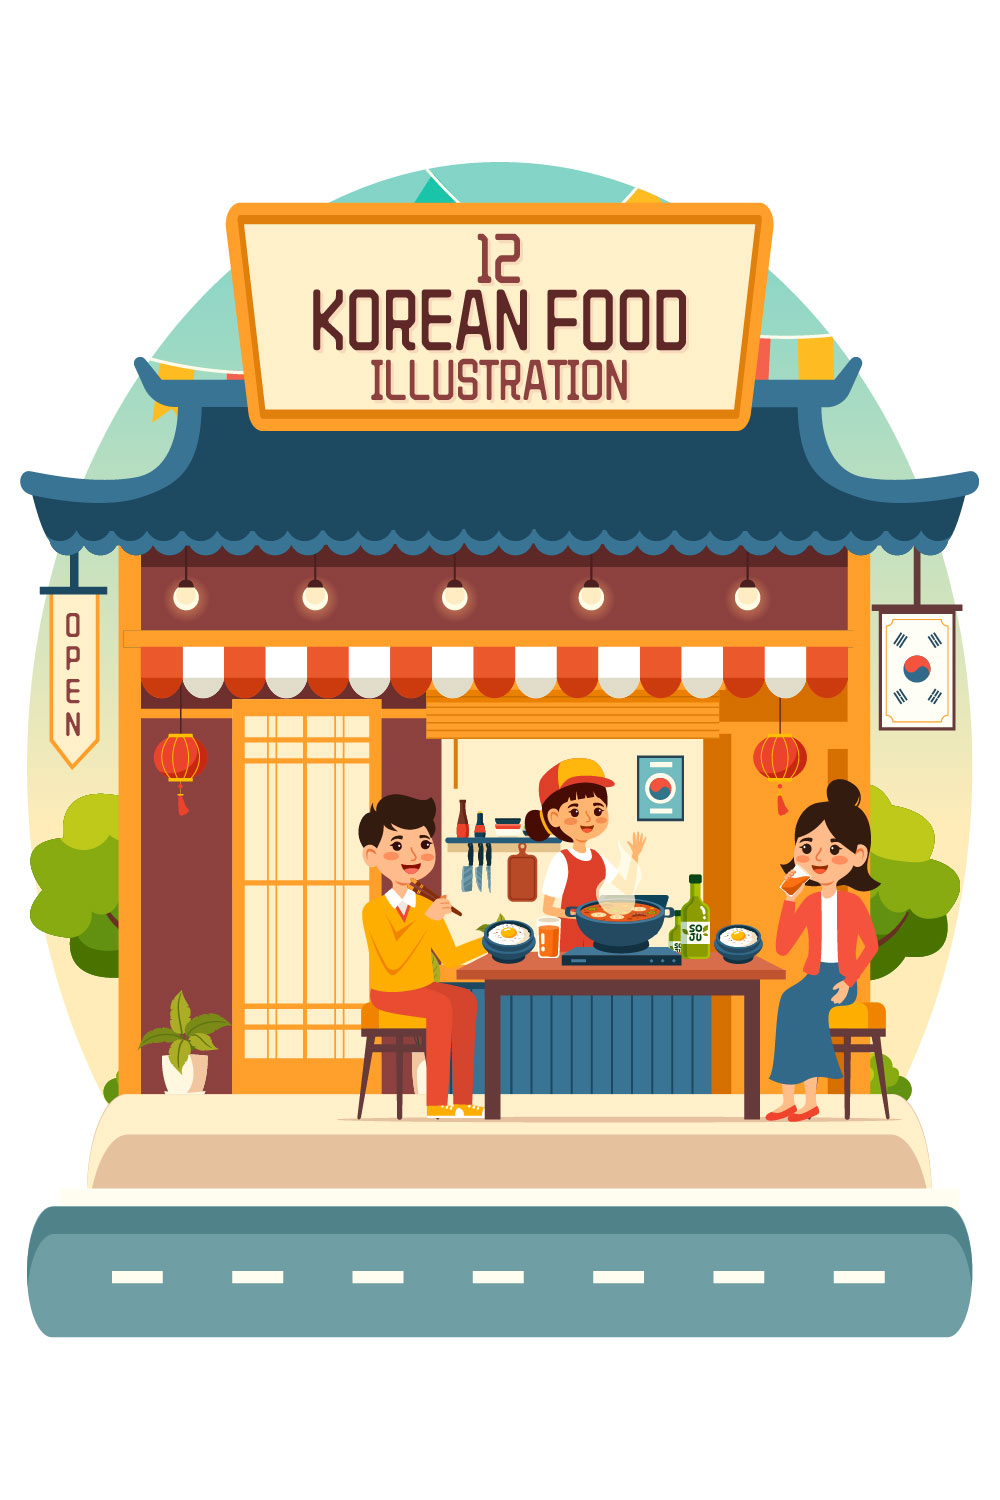 12 Korean Food Illustration pinterest preview image.